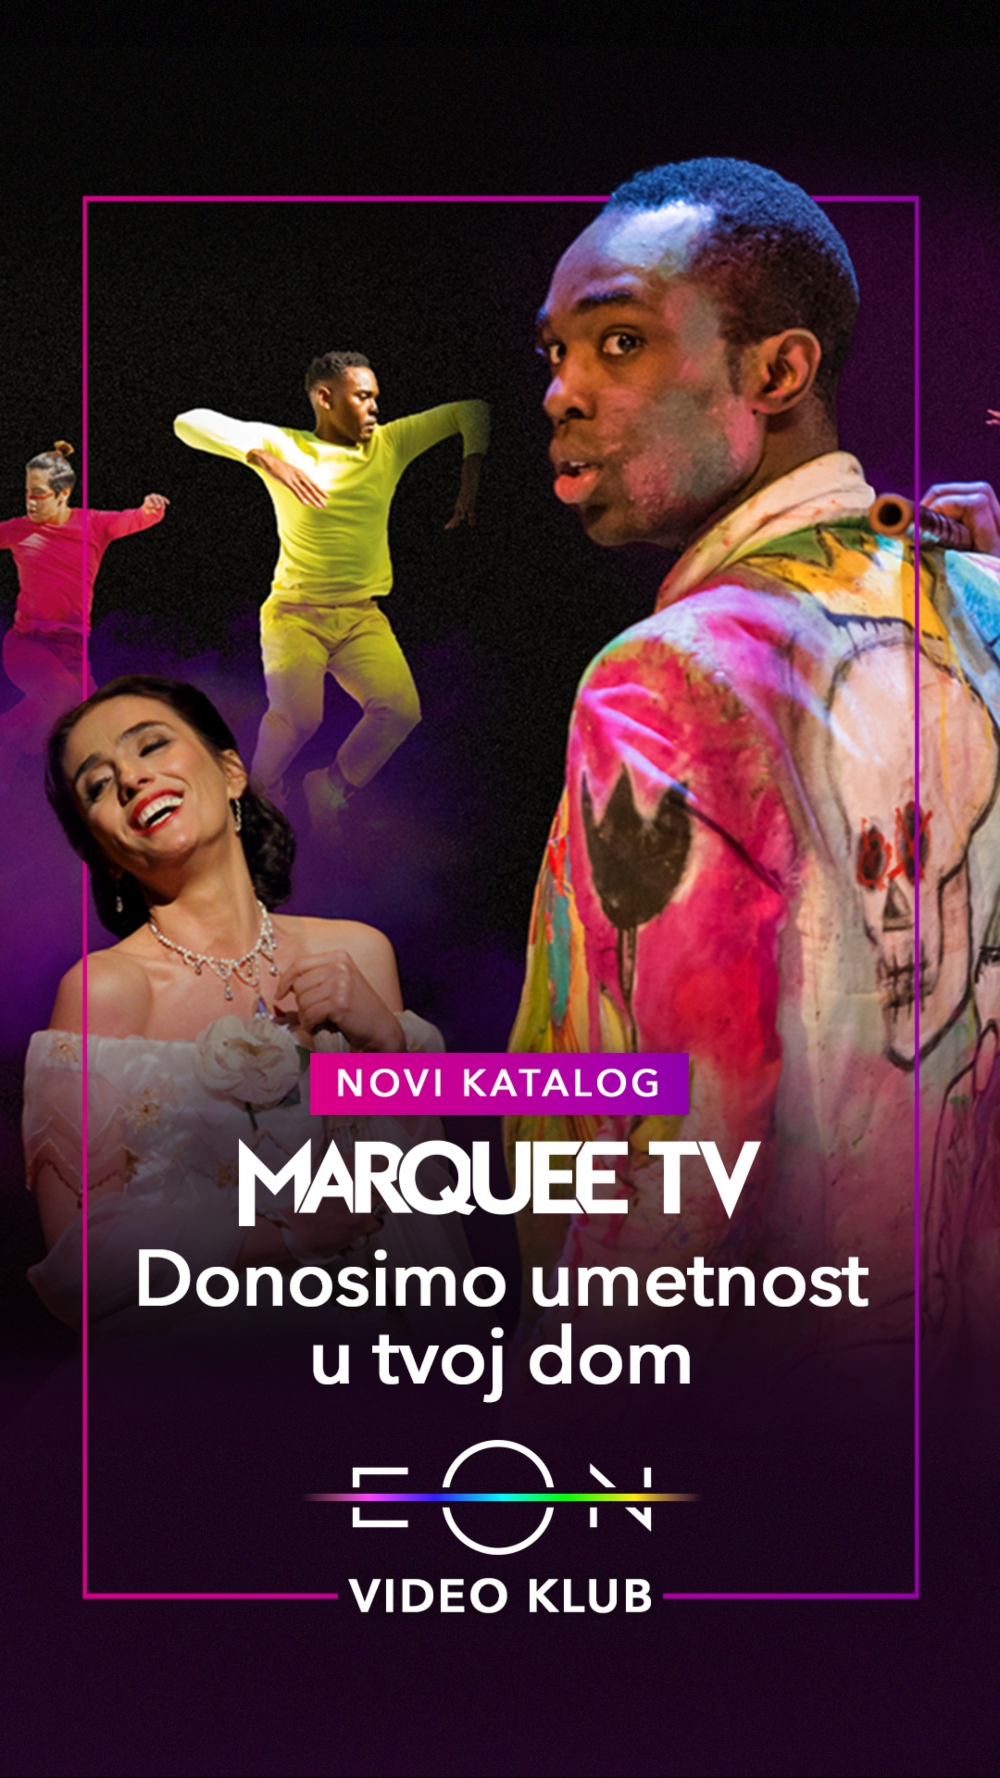 MarqueeTV Op1 1080x1920 2 Marquee TV: Premium striming servis umetnosti i kulture pokreće svoj katalog u EON Video klubu uz SBB